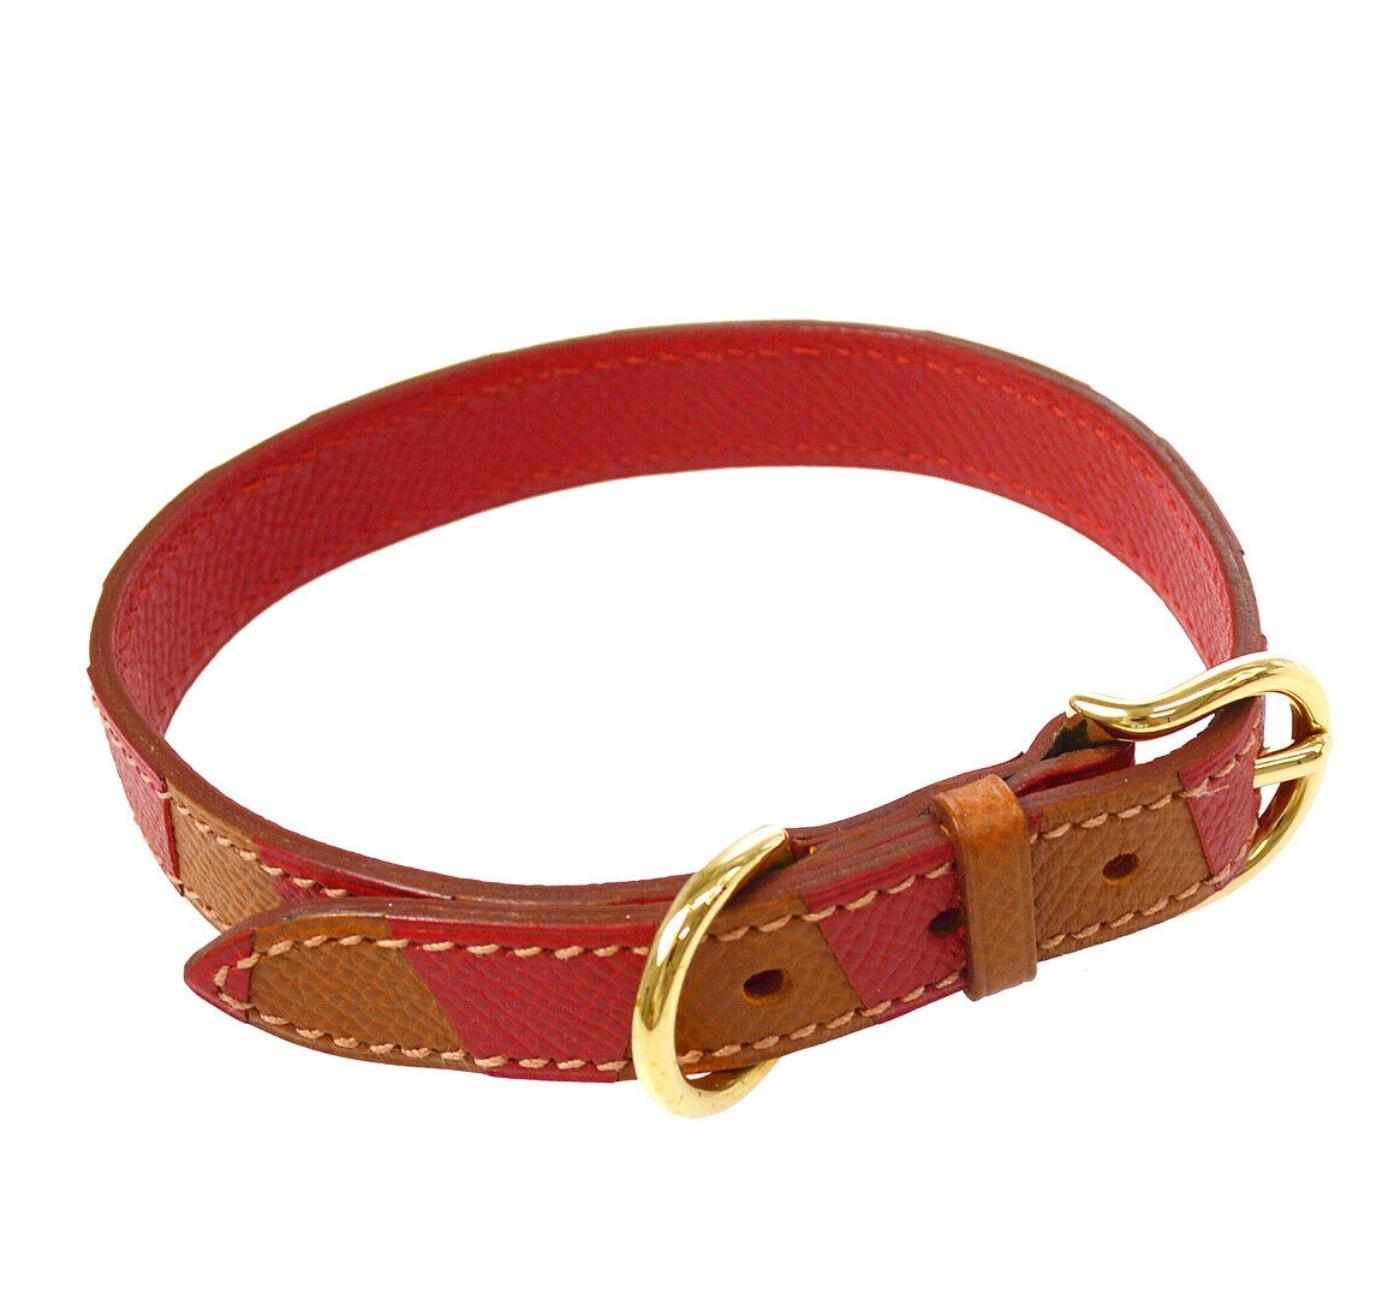 Hermes Dog Leash - 3 For Sale on 1stDibs | dog leash prices 